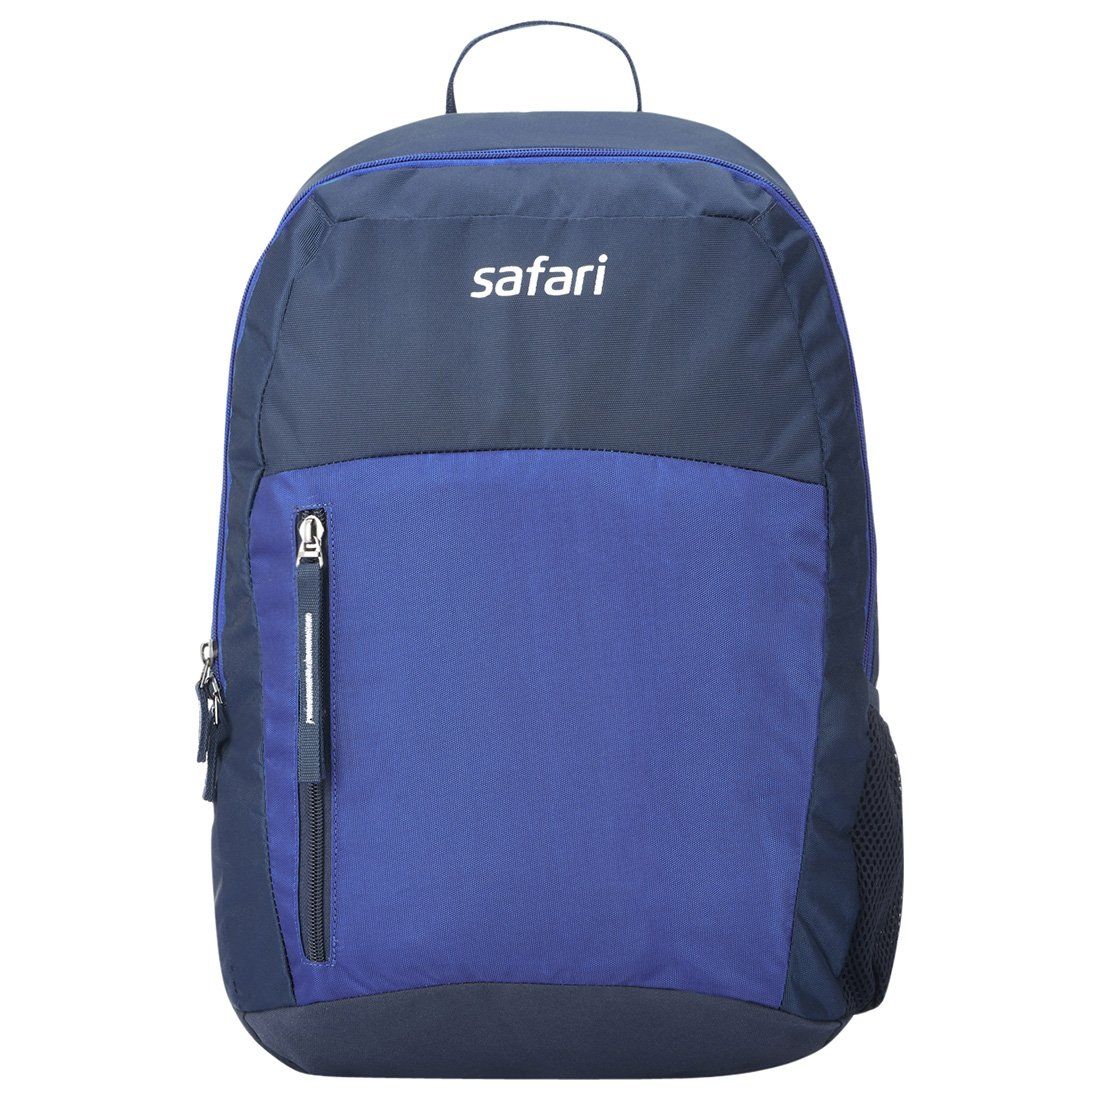 Safari 26 Ltrs Blue Casual Backpack (CHAMP19CBBLU)